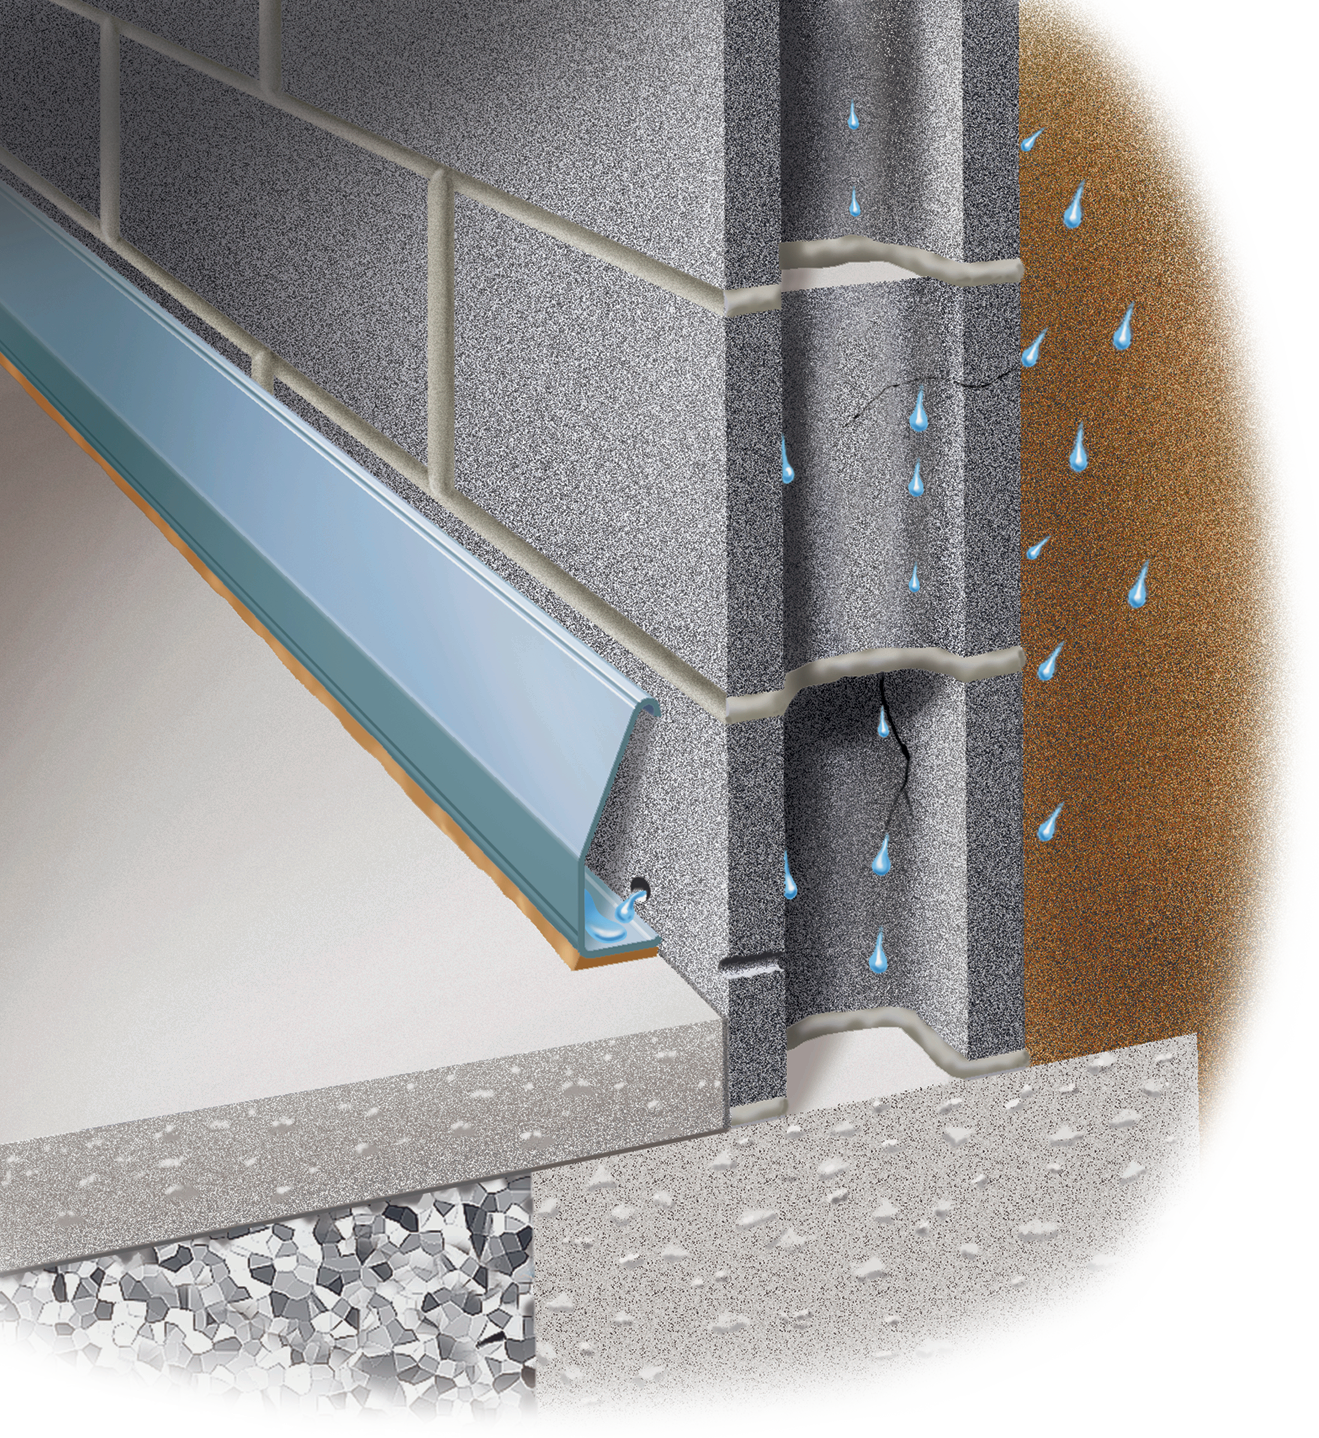 DIY basement waterproofing system